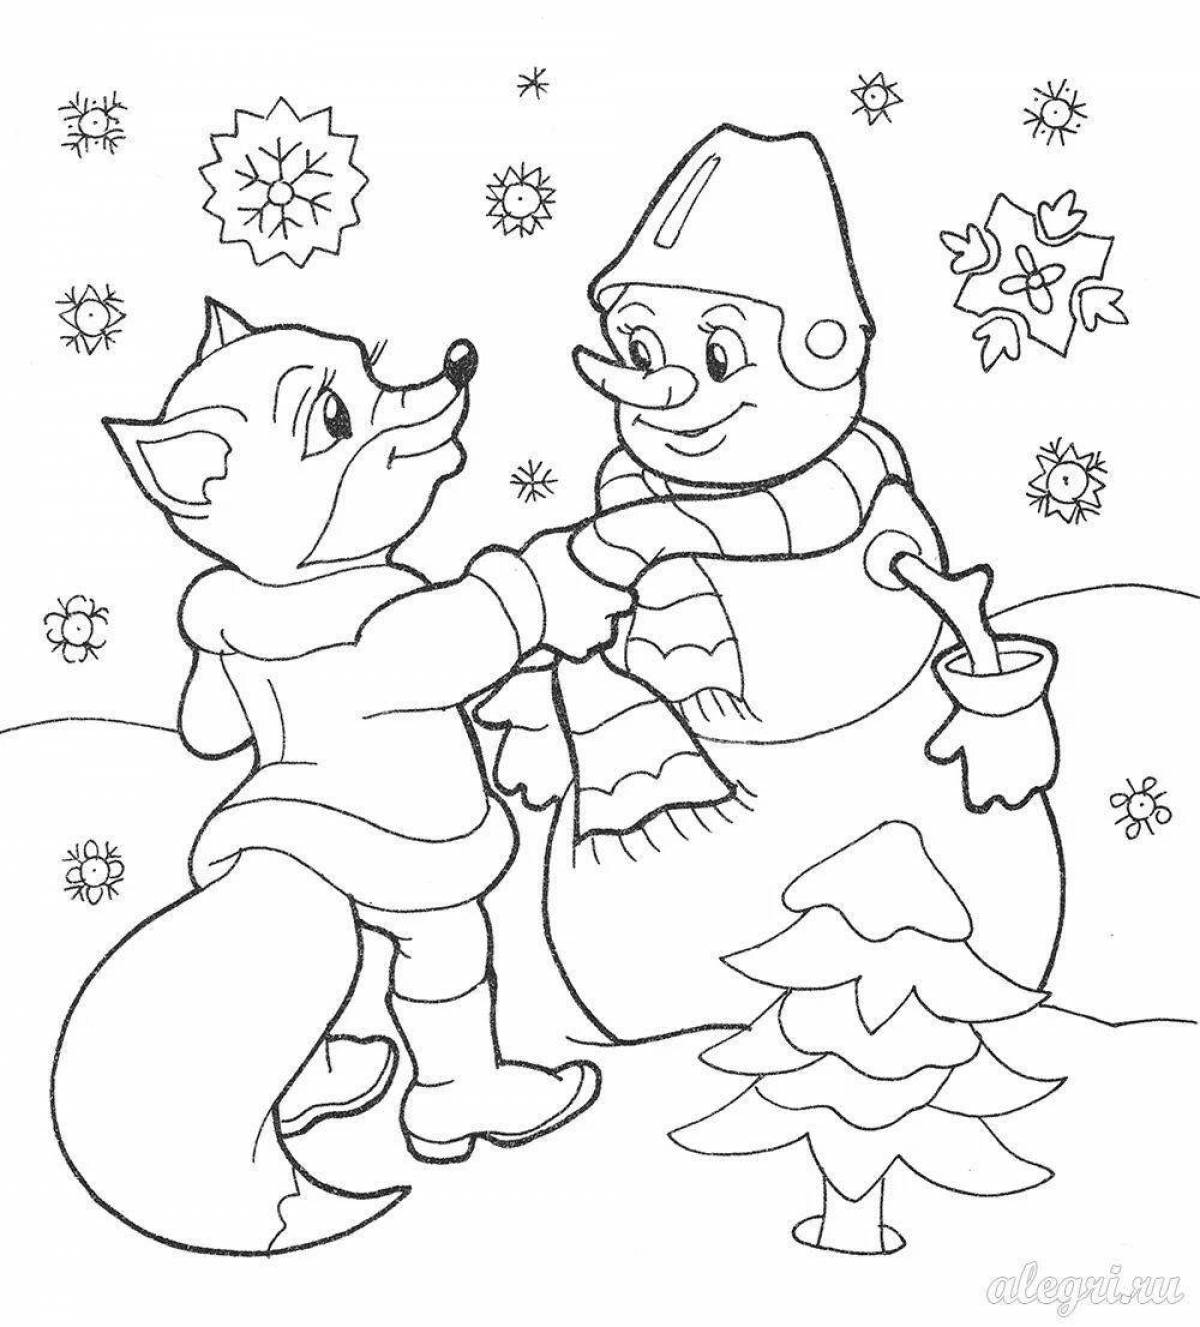 Amazing fox Christmas coloring book